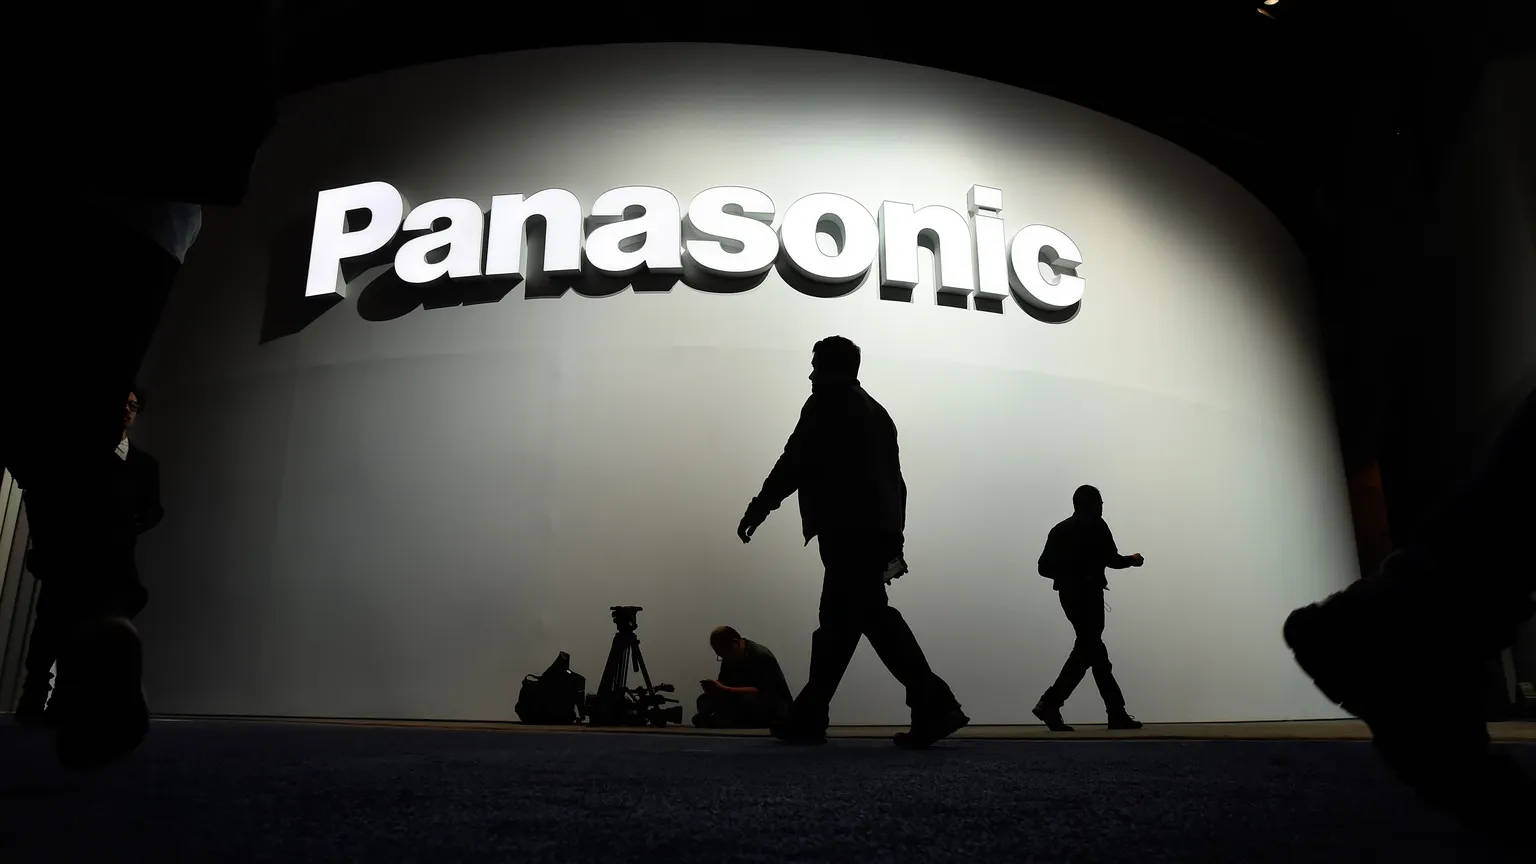 Panasonicsilhouette Män Wallpaper